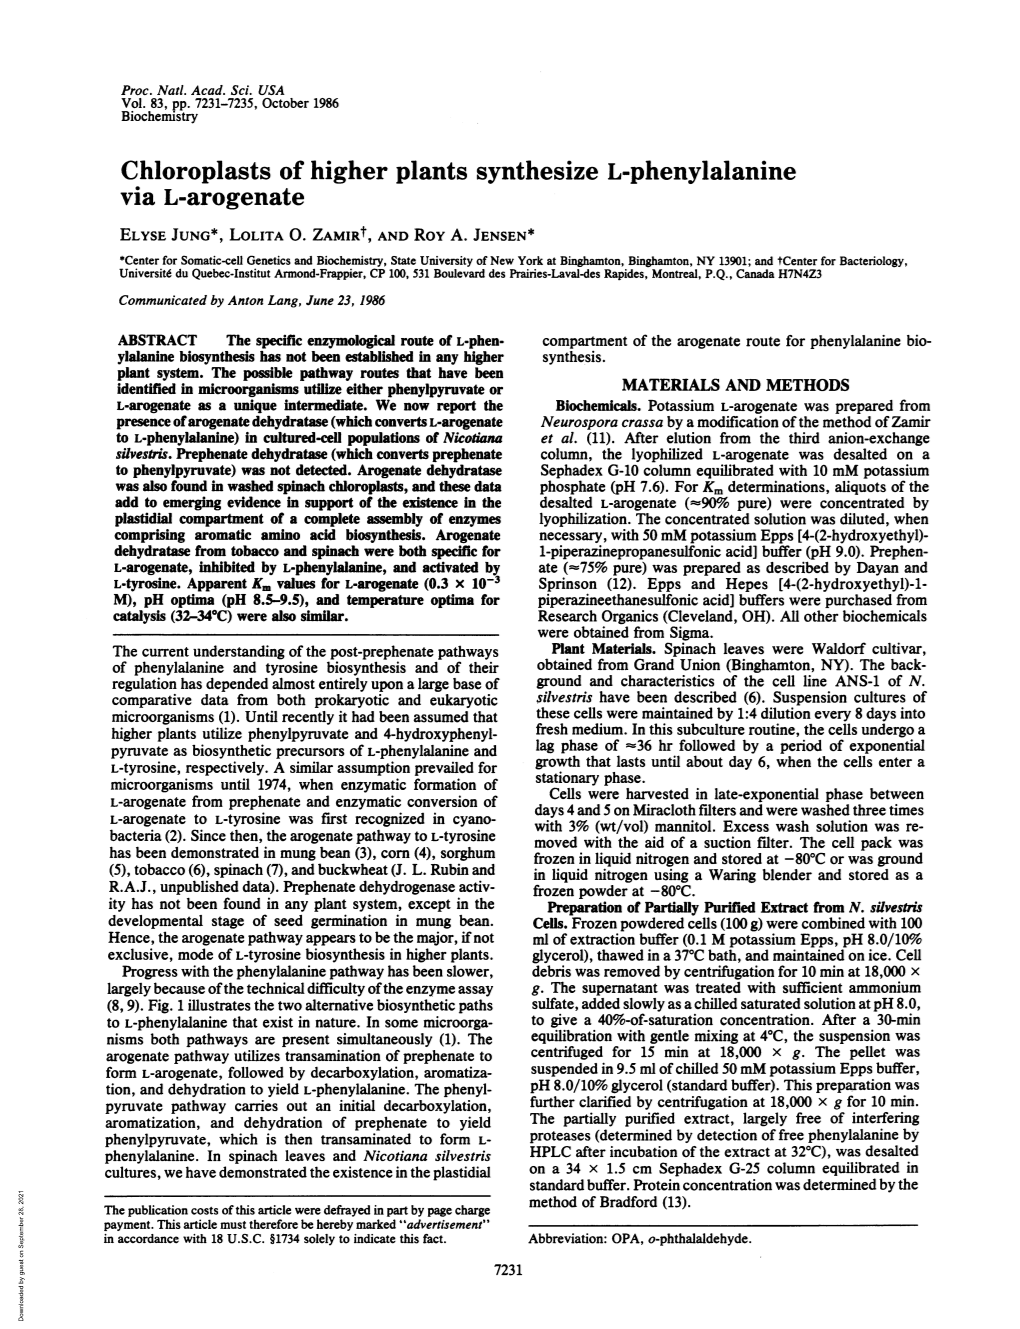 Chloroplasts of Higher Plants Synthesize L-Phenylalanine Via L-Arogenate